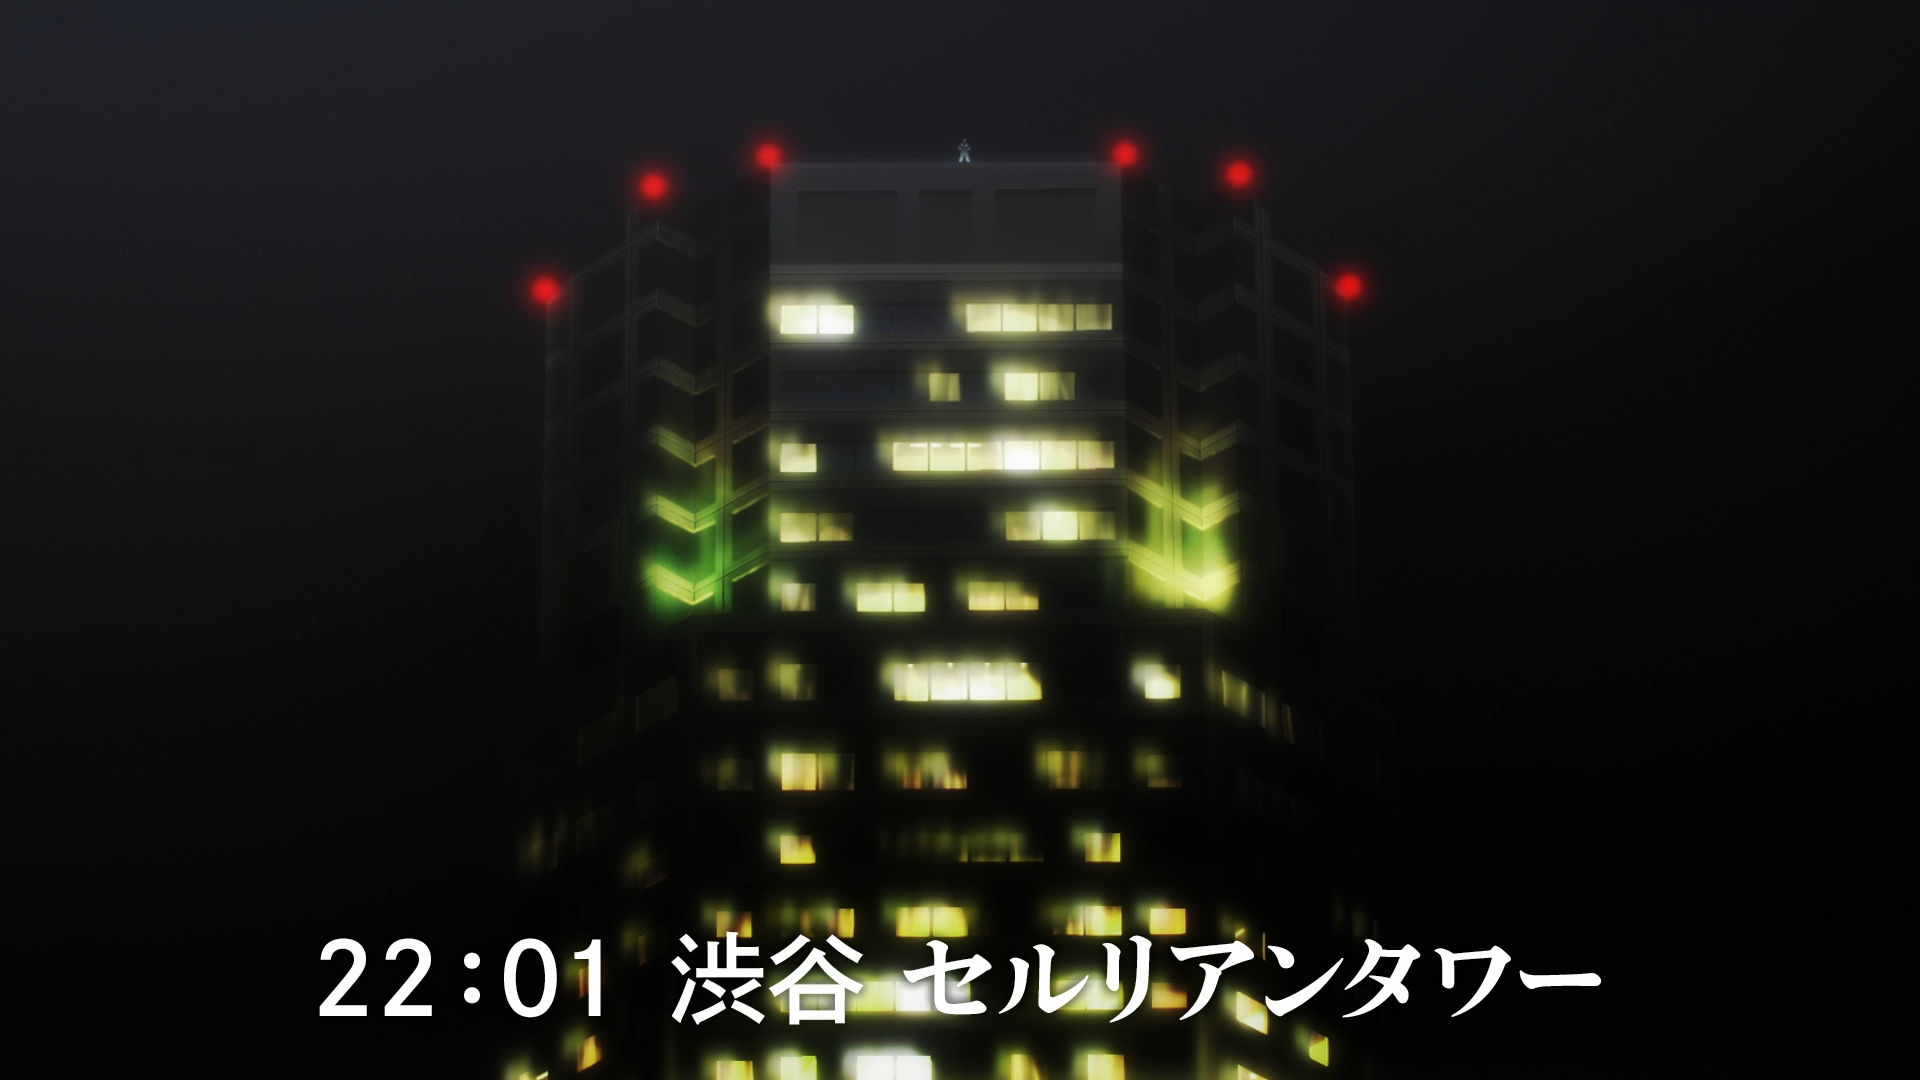 Jujutsu Kaisen Shibuya Arc - Anime Of The Year? #animefightamvs #jujut, the next station is shibuya